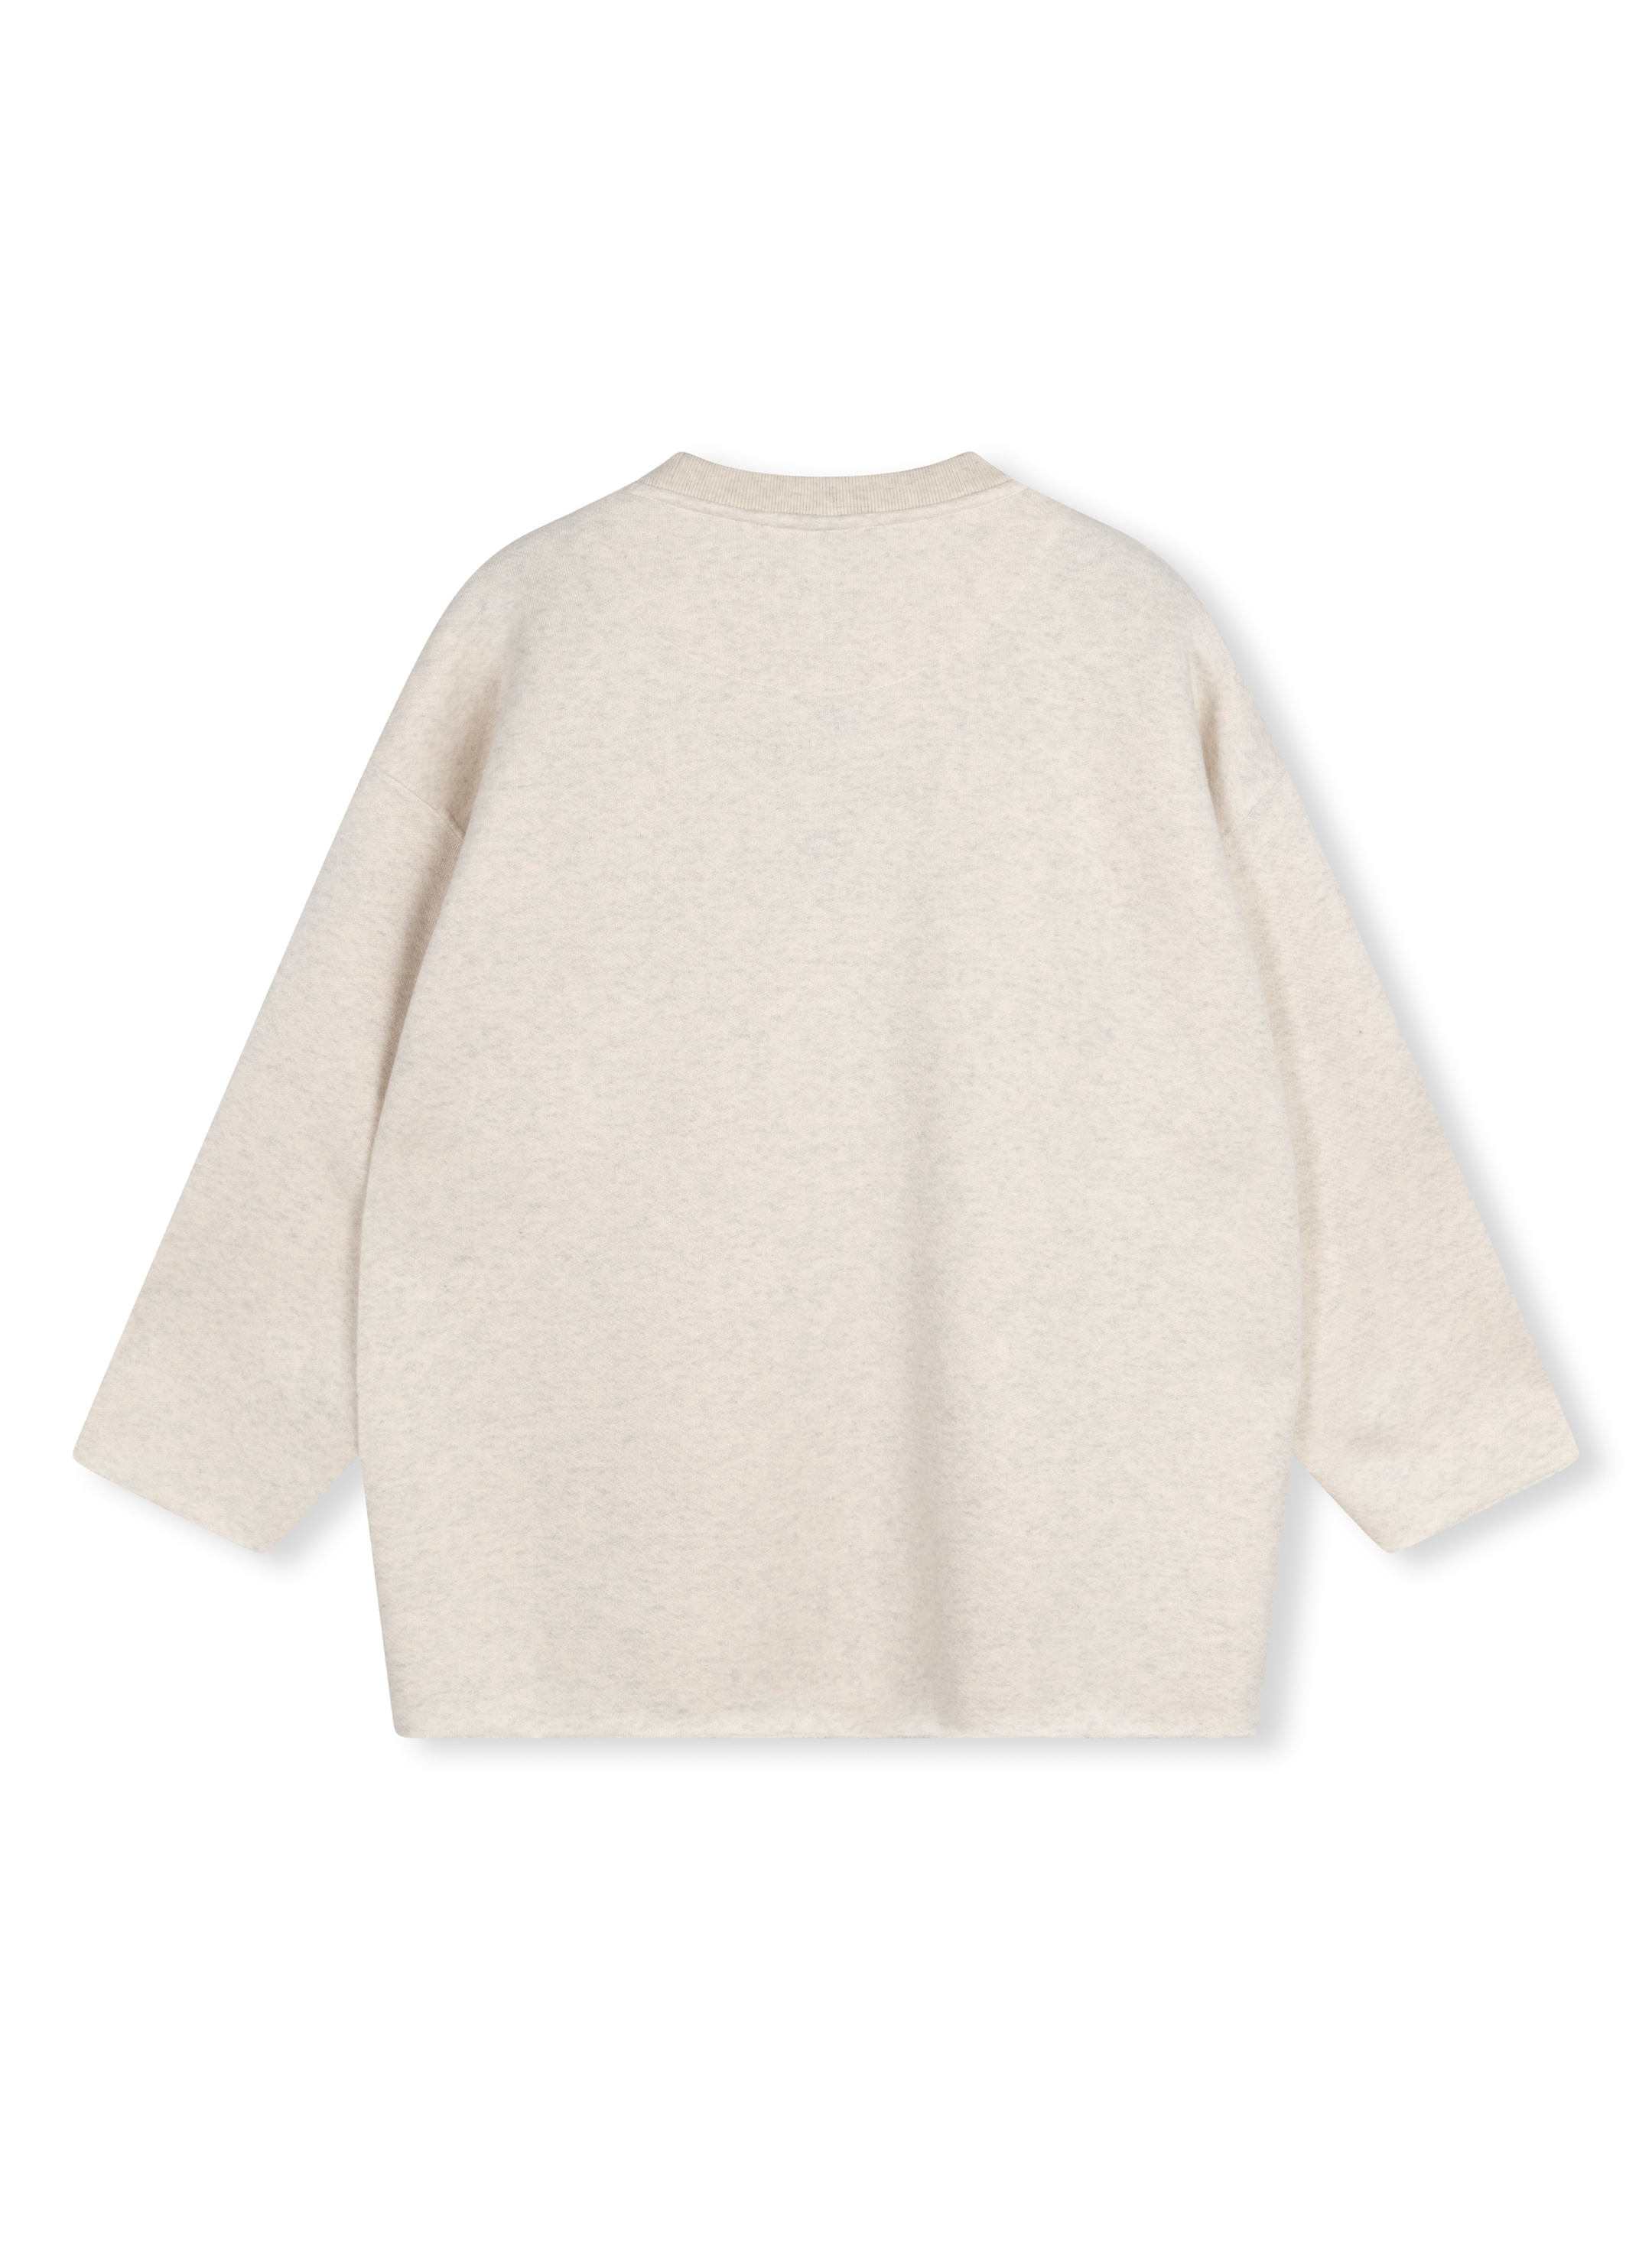 10Days statement sweater apres-ski soft white melee